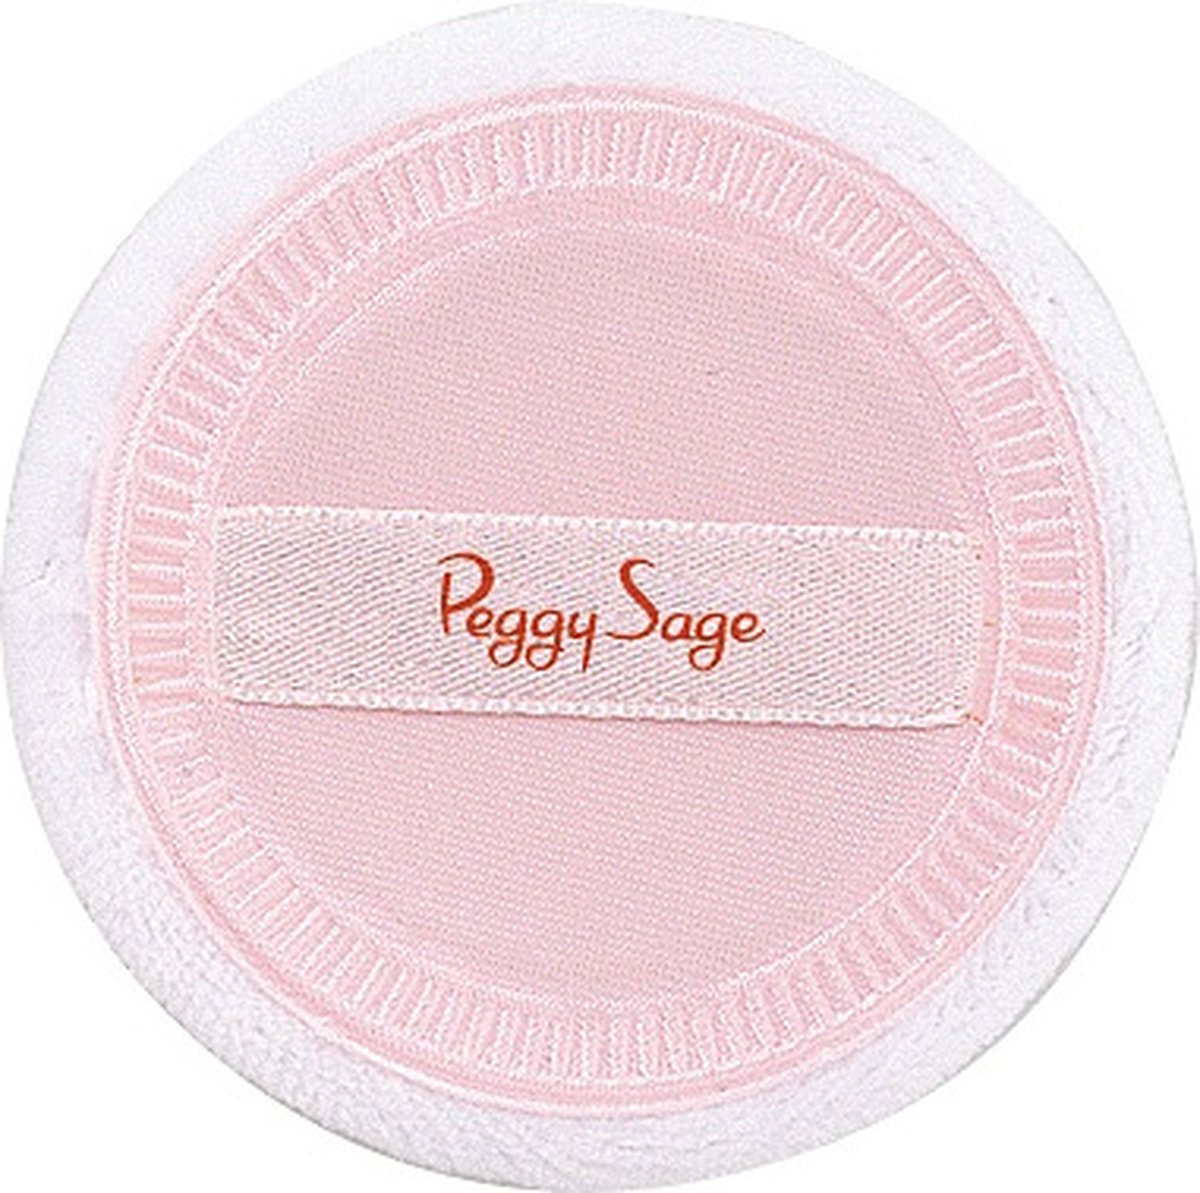 Peggy Sage - Powderpuff Large For Powder 2Pcs